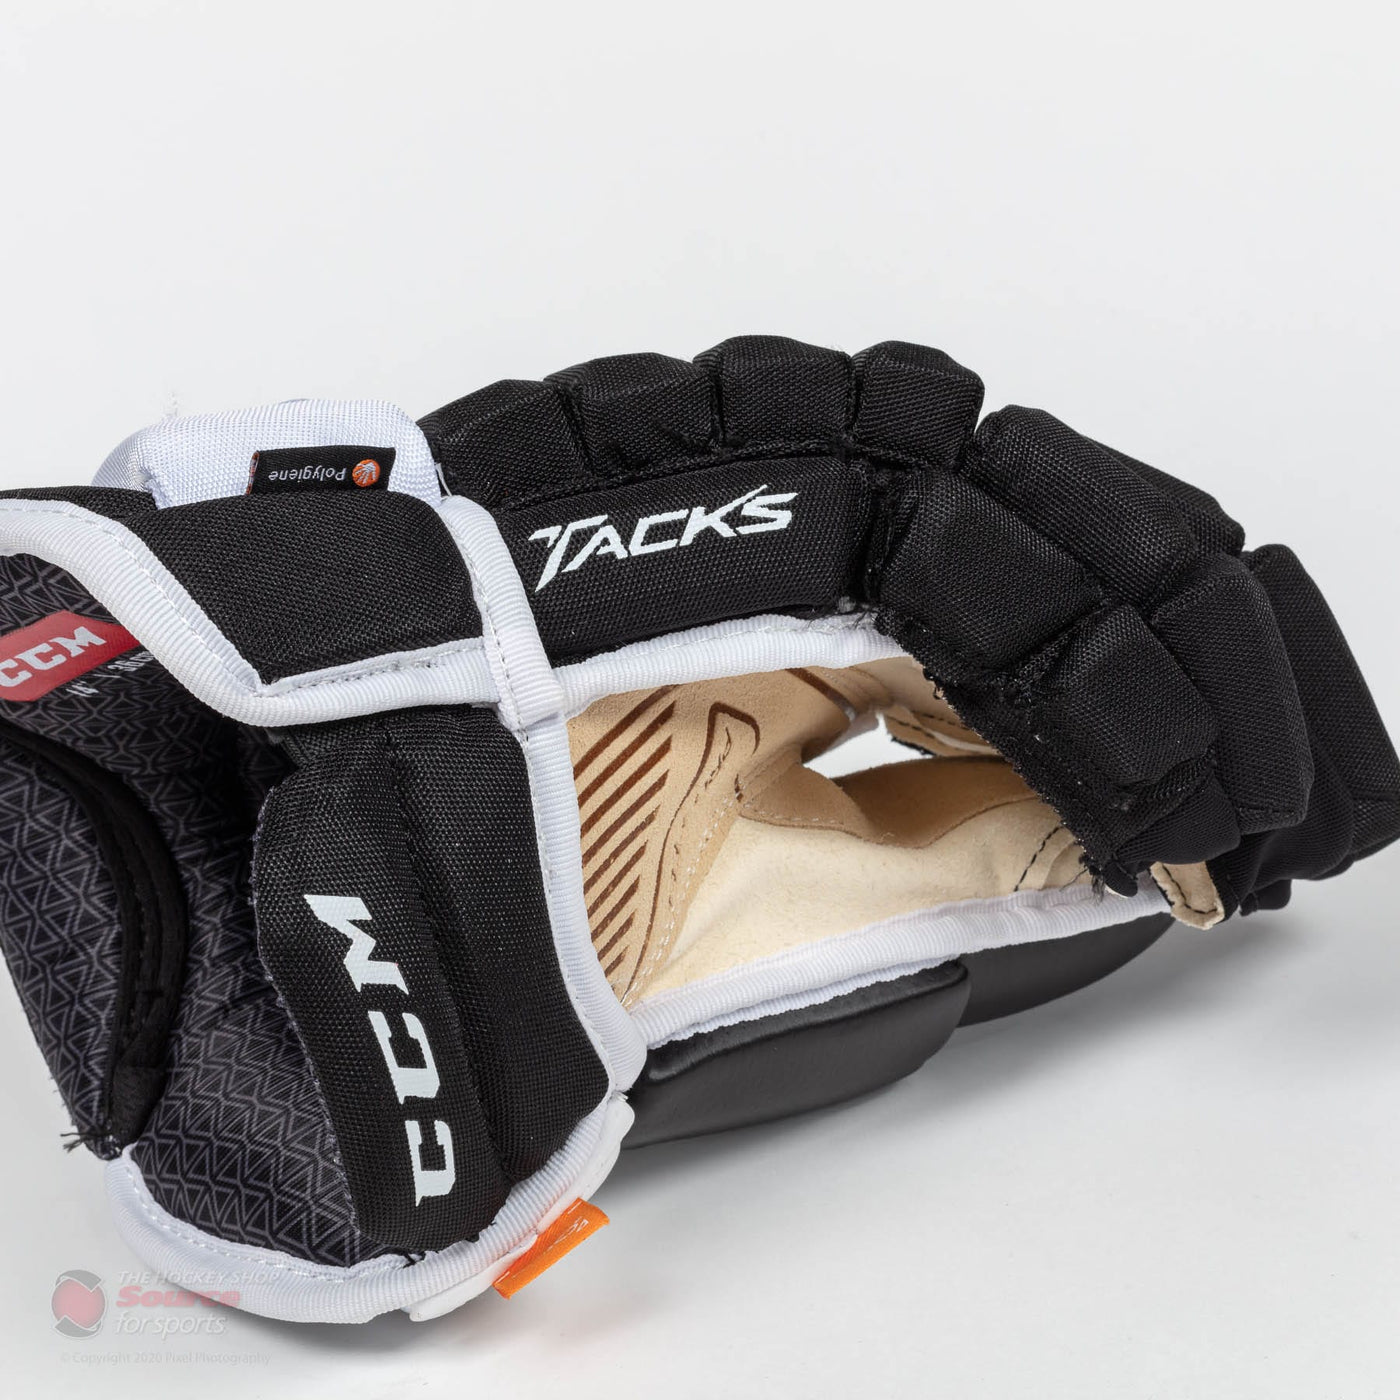 CCM Tacks 4R Pro² Senior Hockey Gloves